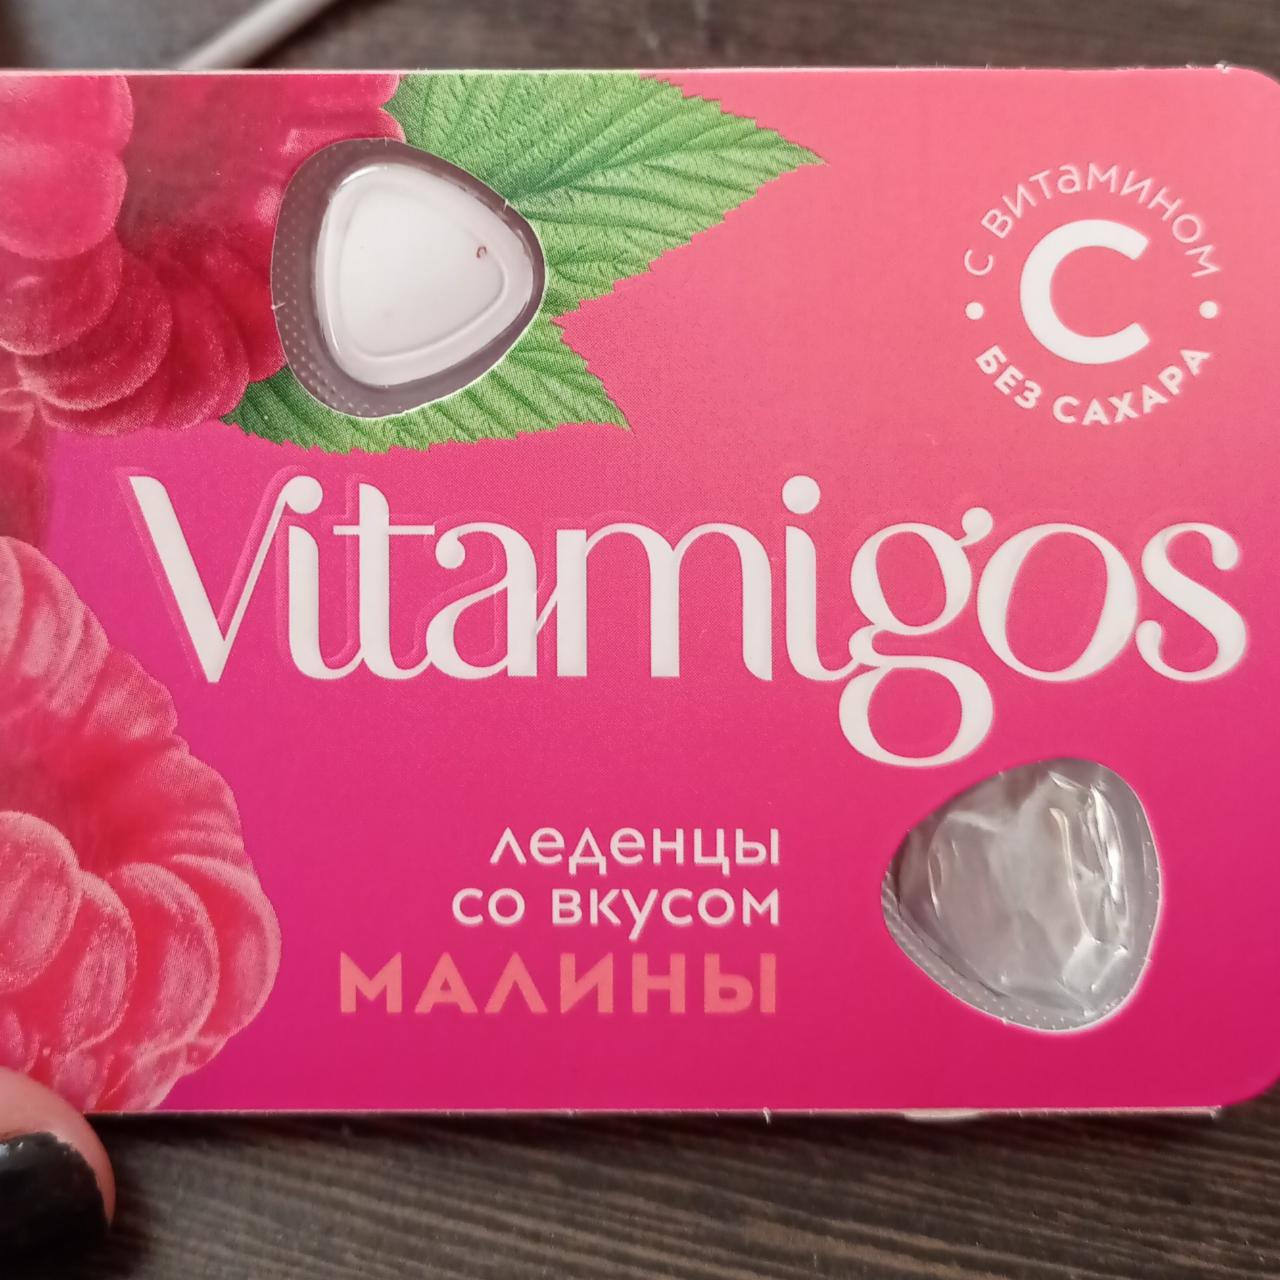 Фото - Леденцы со вкусом малины Vitamigos